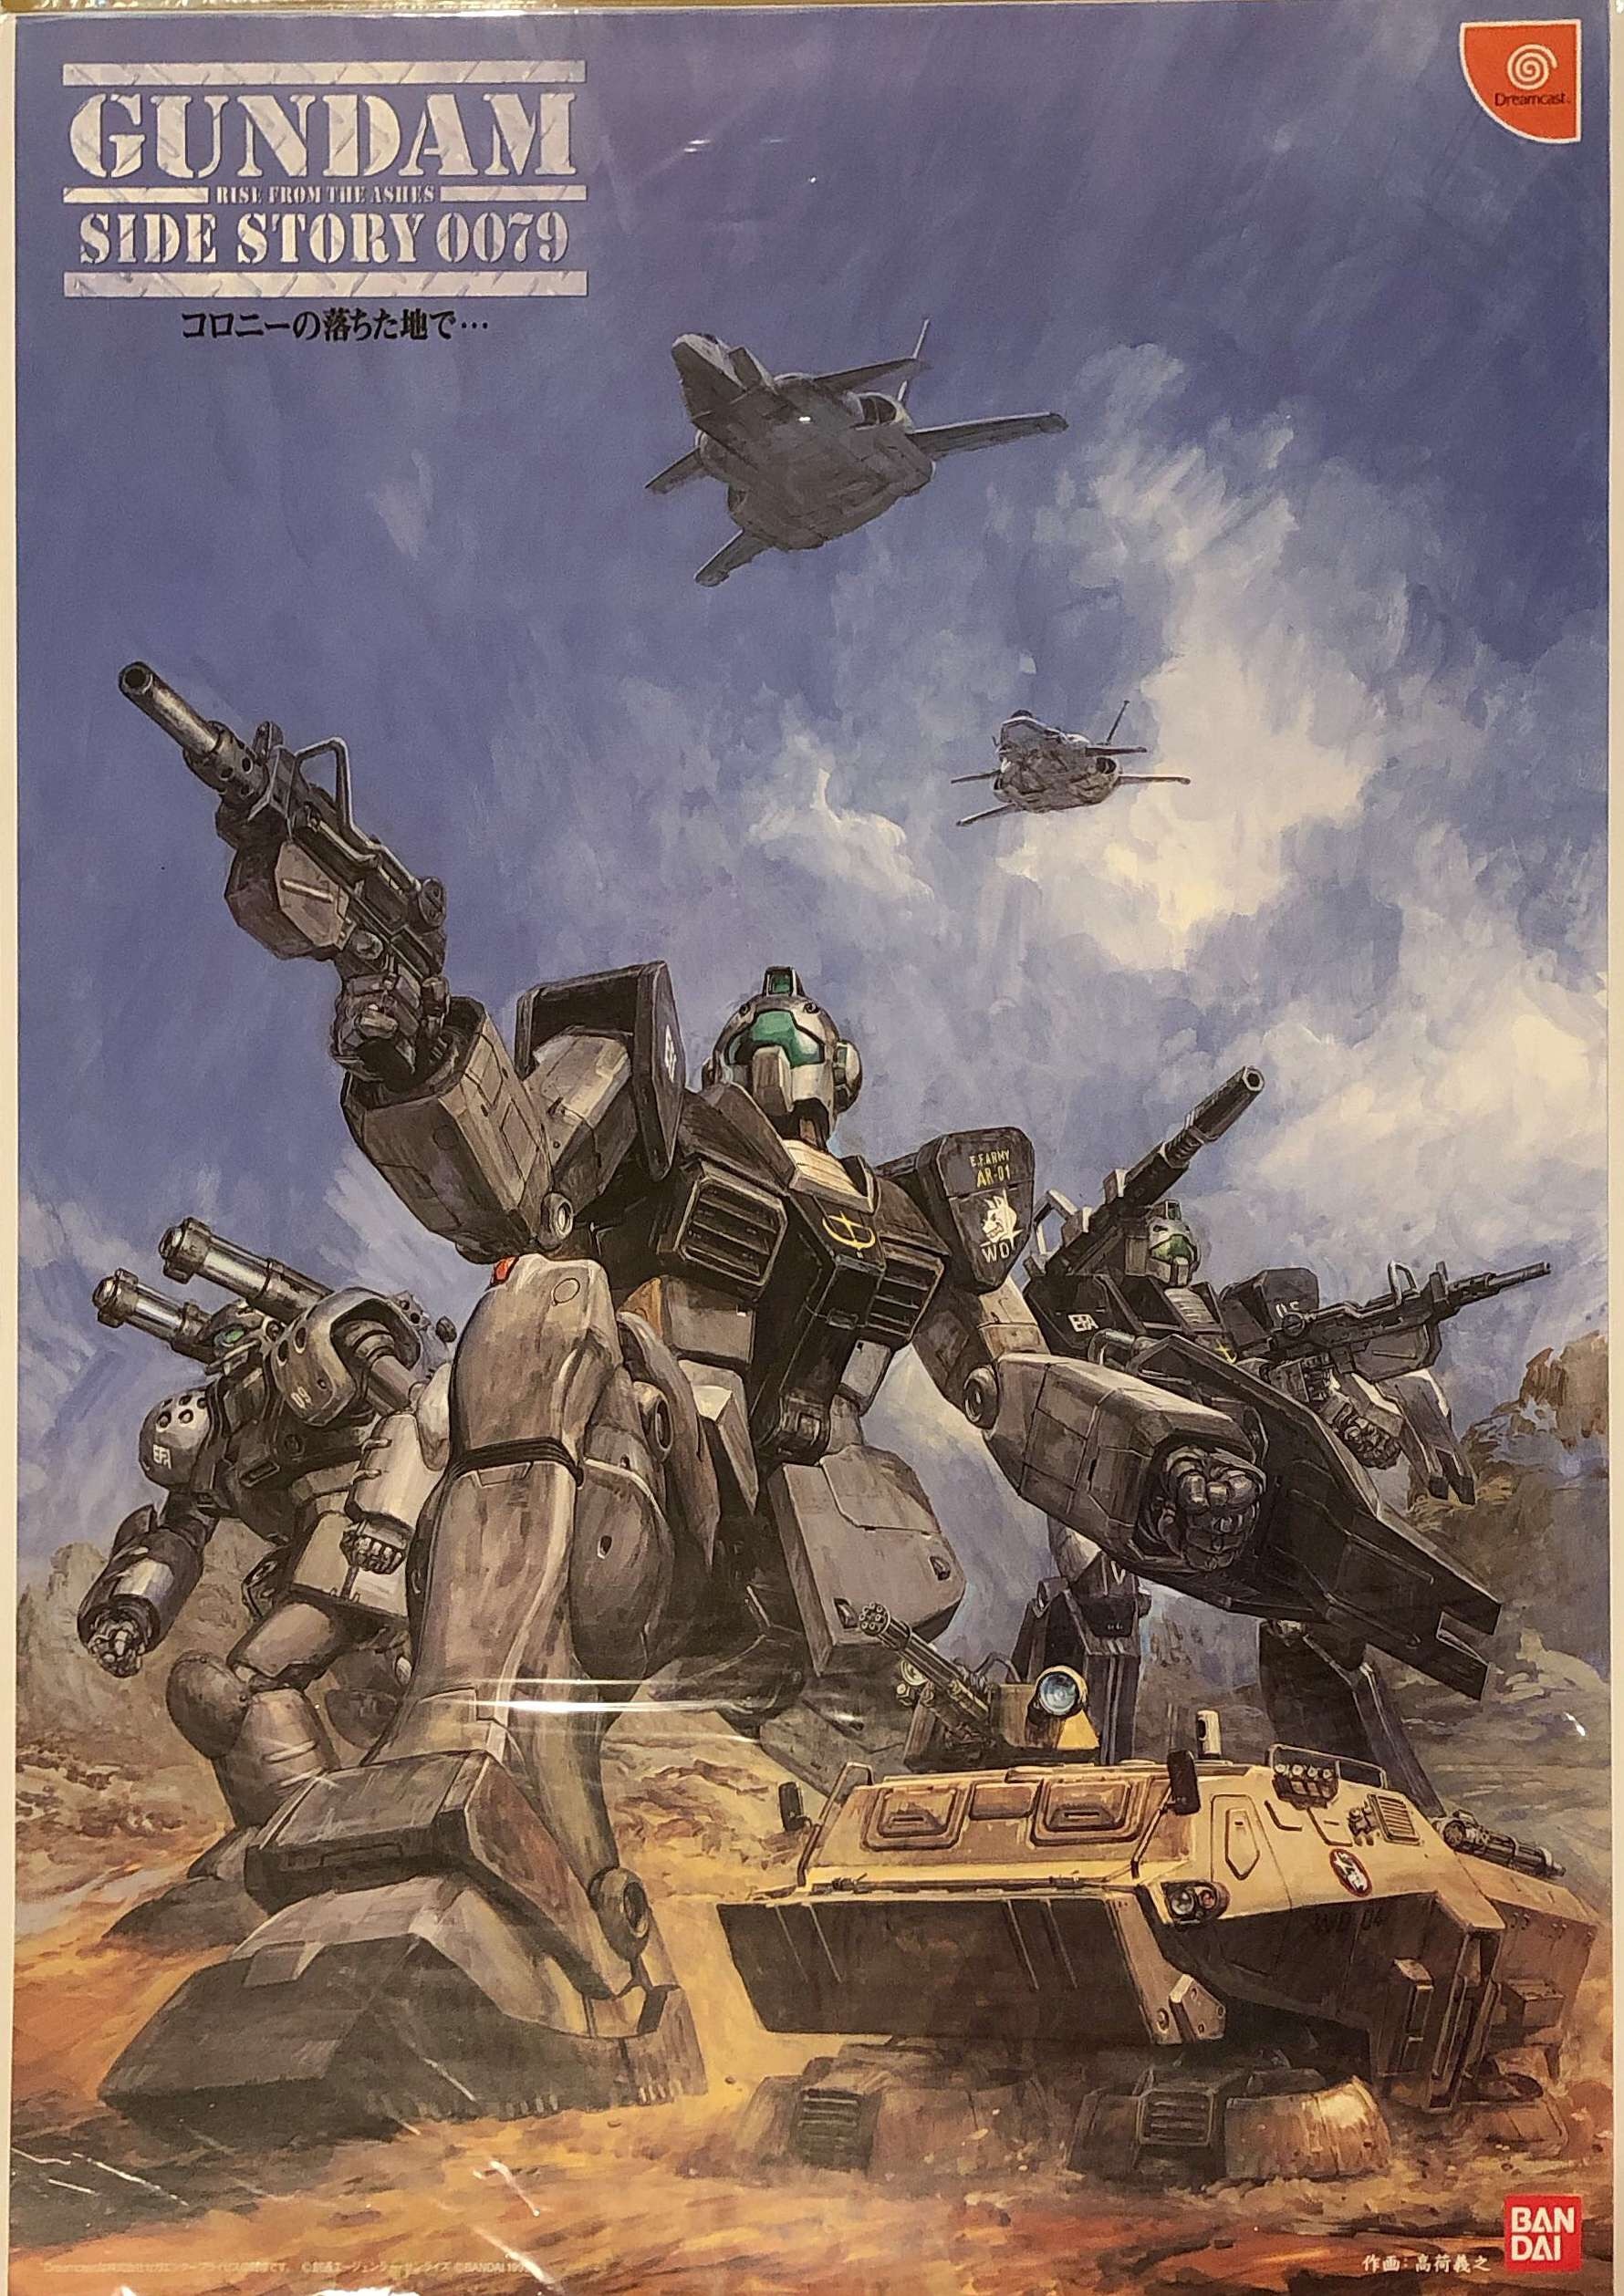 Bandai Promotional For Koni Yoshiyuki Mobile Suit Gundam Side B2 Story 0 079 Colonies Of The Fallen Earth Poster Mandarake Online Shop